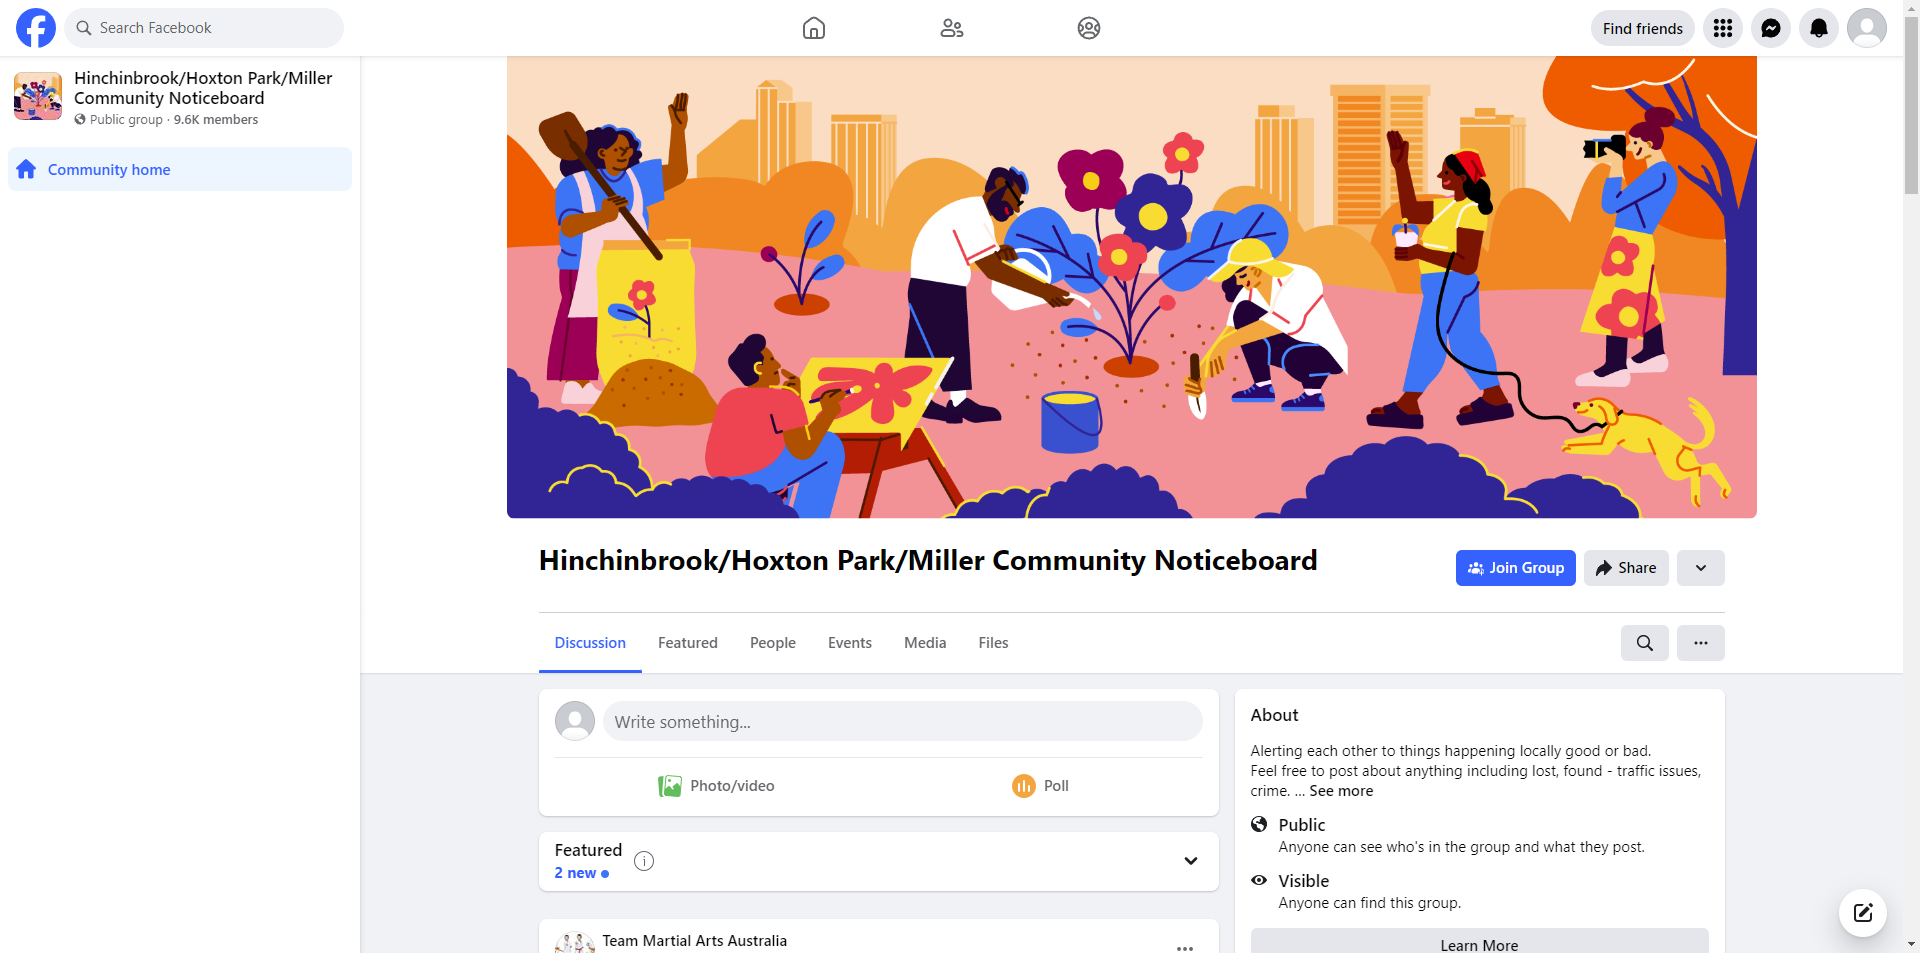 Hinchinbrook/Hoxton Park/Miller Community Noticeboard